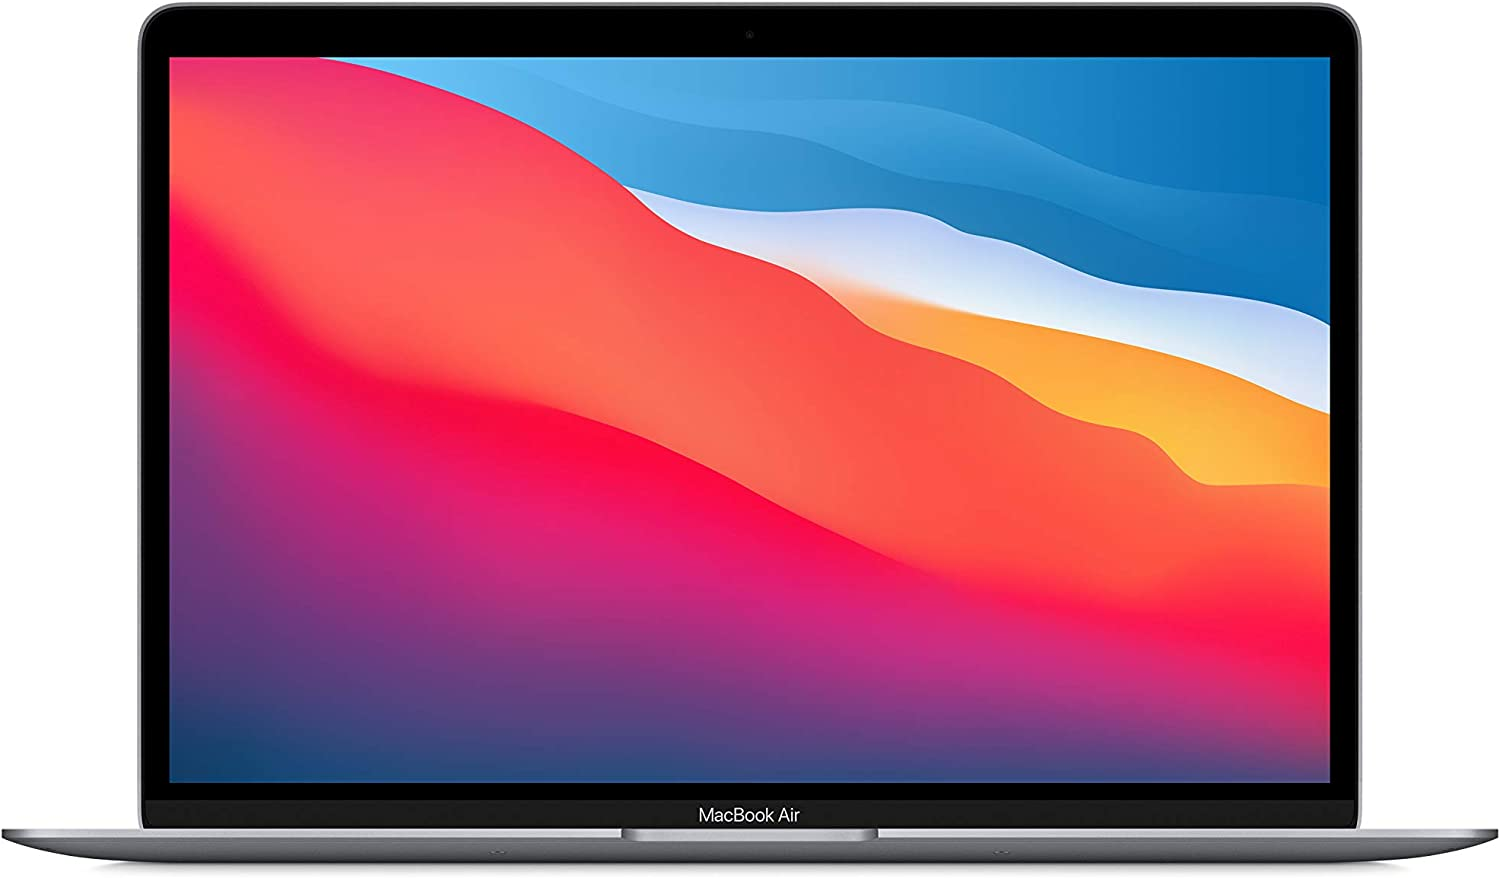 Apple MacBook Air M1 (2020) $869